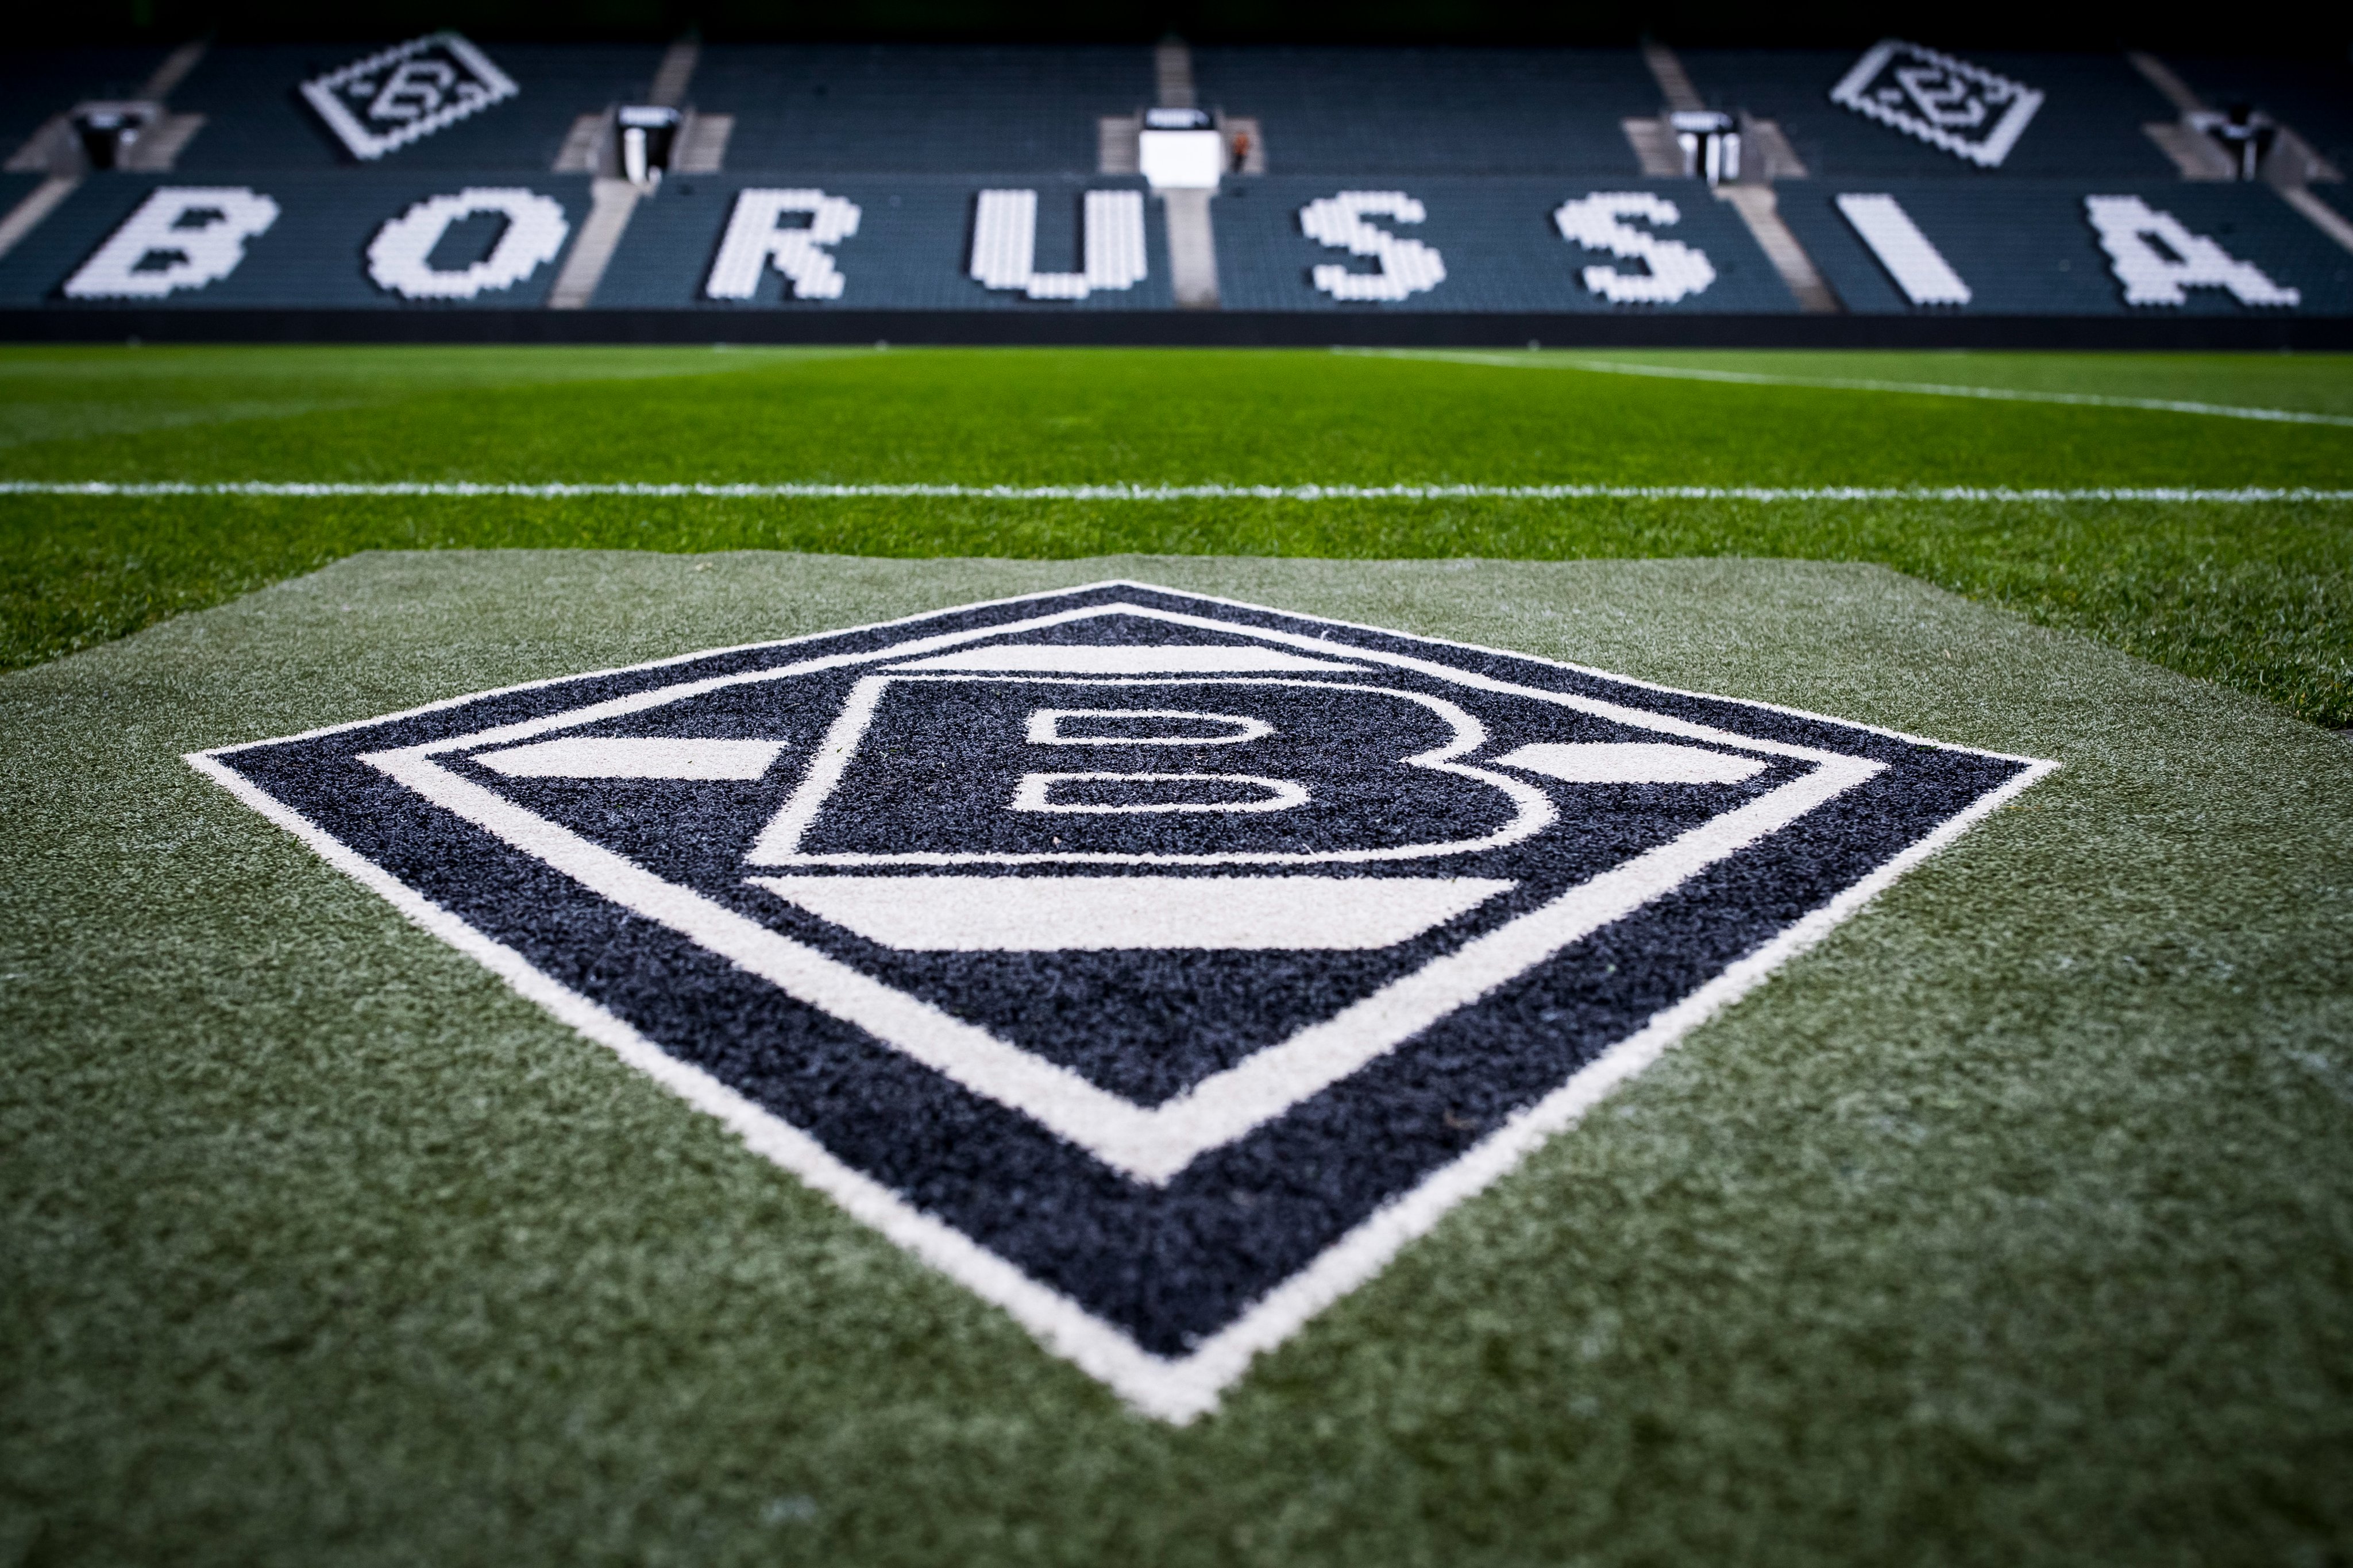 Borussia Monchengladbach confirm both Denis Zakaria and Matthias Ginter are set to leave